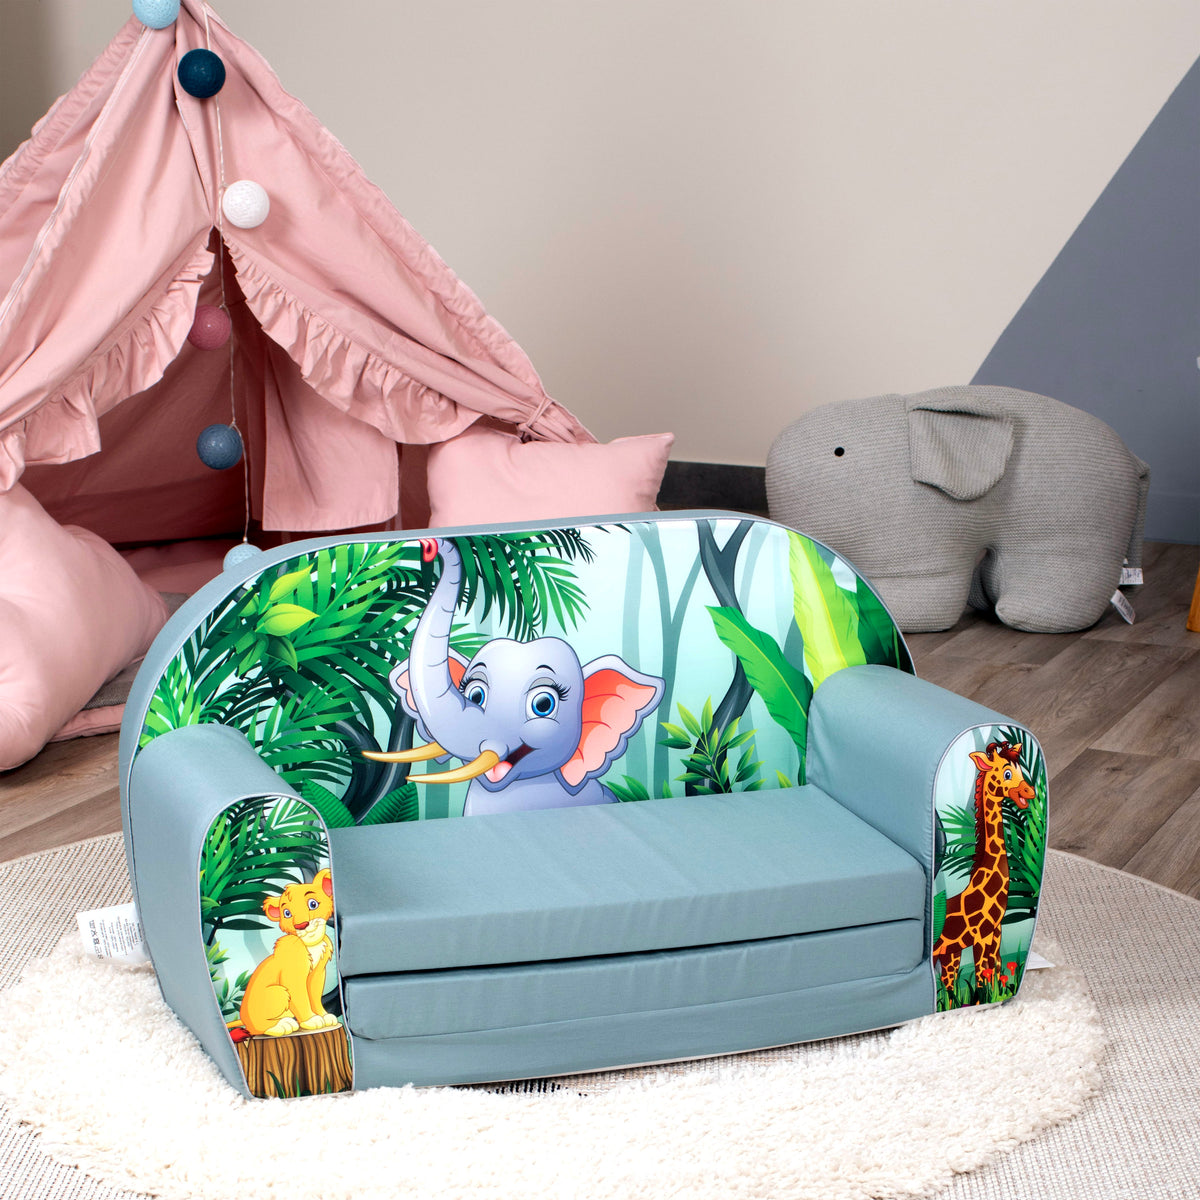 DELSIT Toddler Couch & Kids Sofa - Flip Open Double Sofa - Adorable Elephant